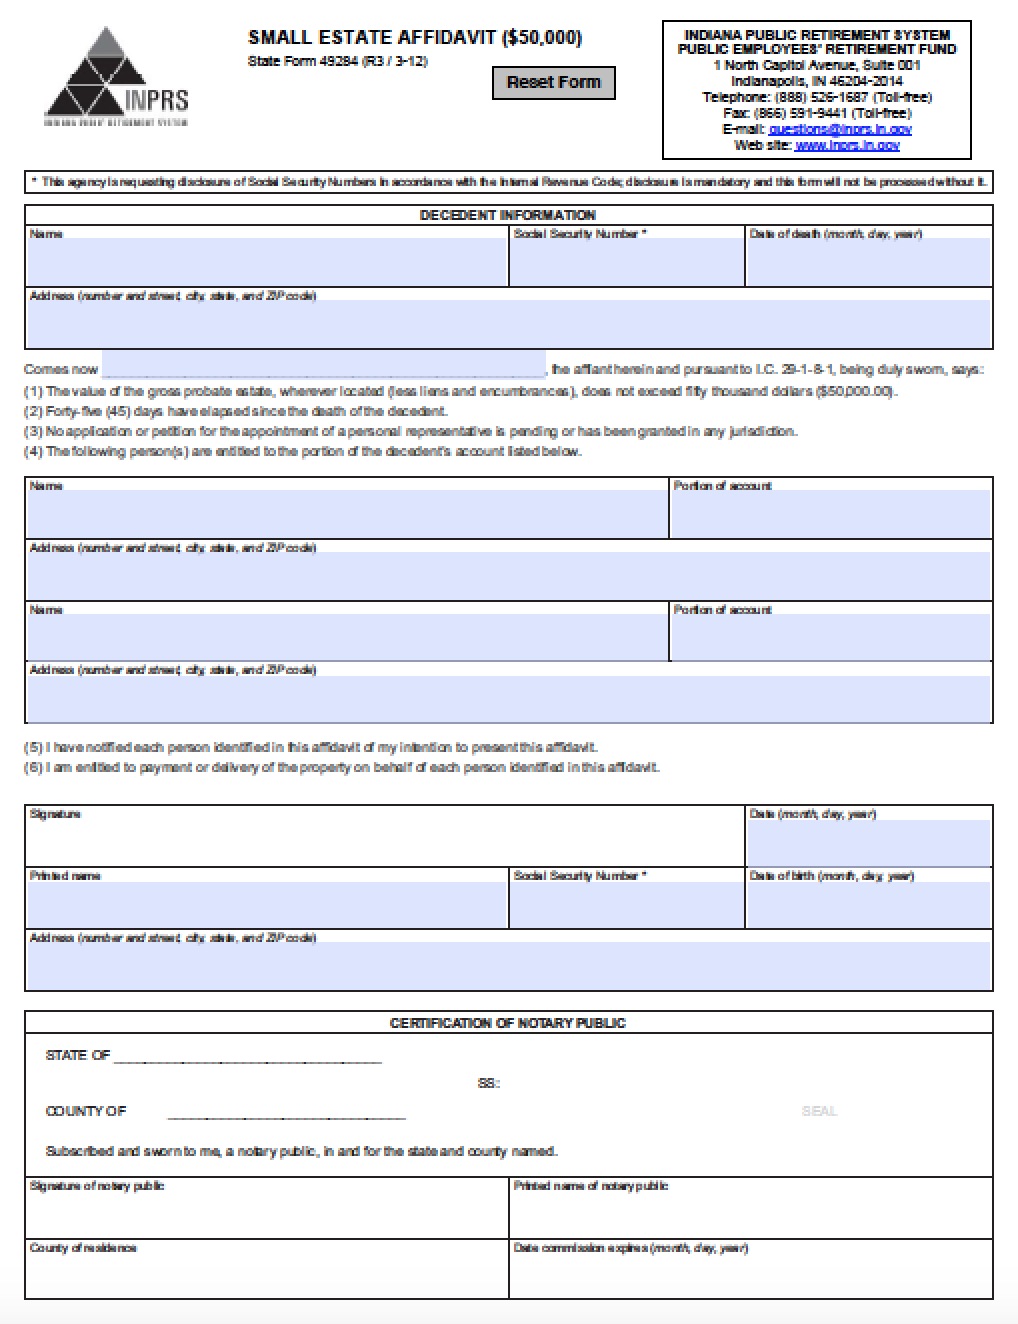 free-indiana-small-estate-affidavit-form-49284-form-pdf-word